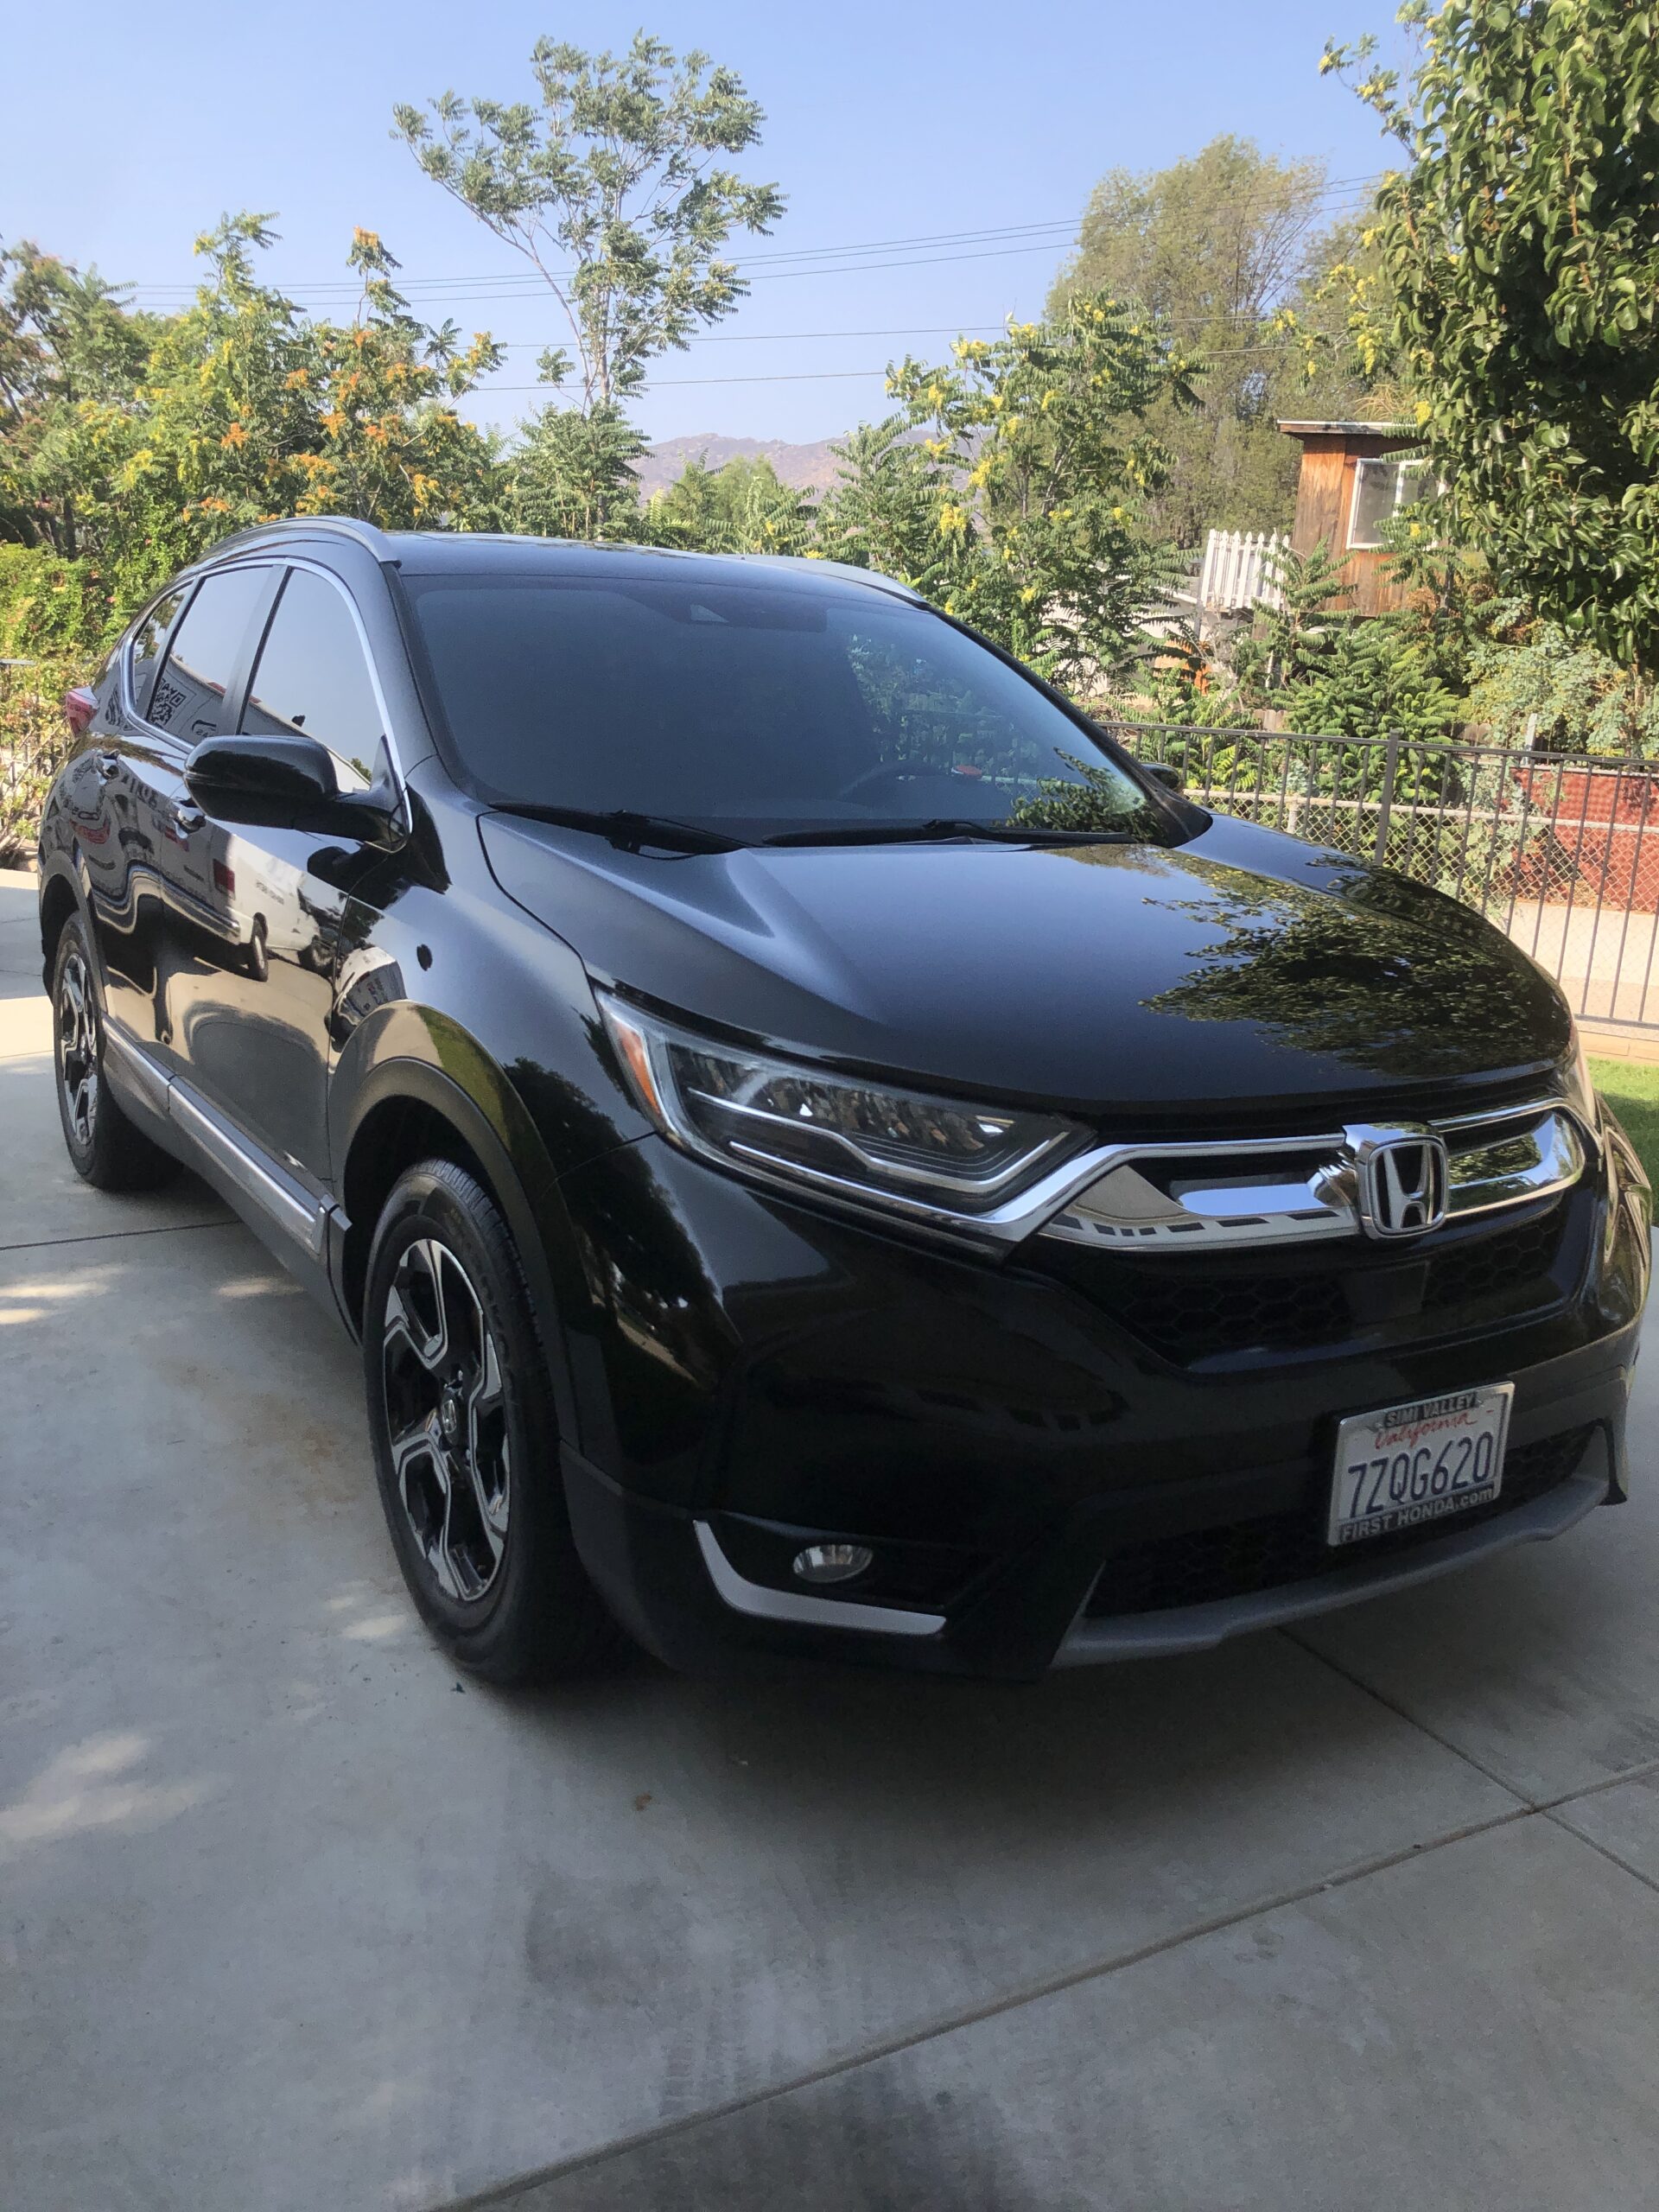 Honda CRV - Thousand Oaks Auto Detailing